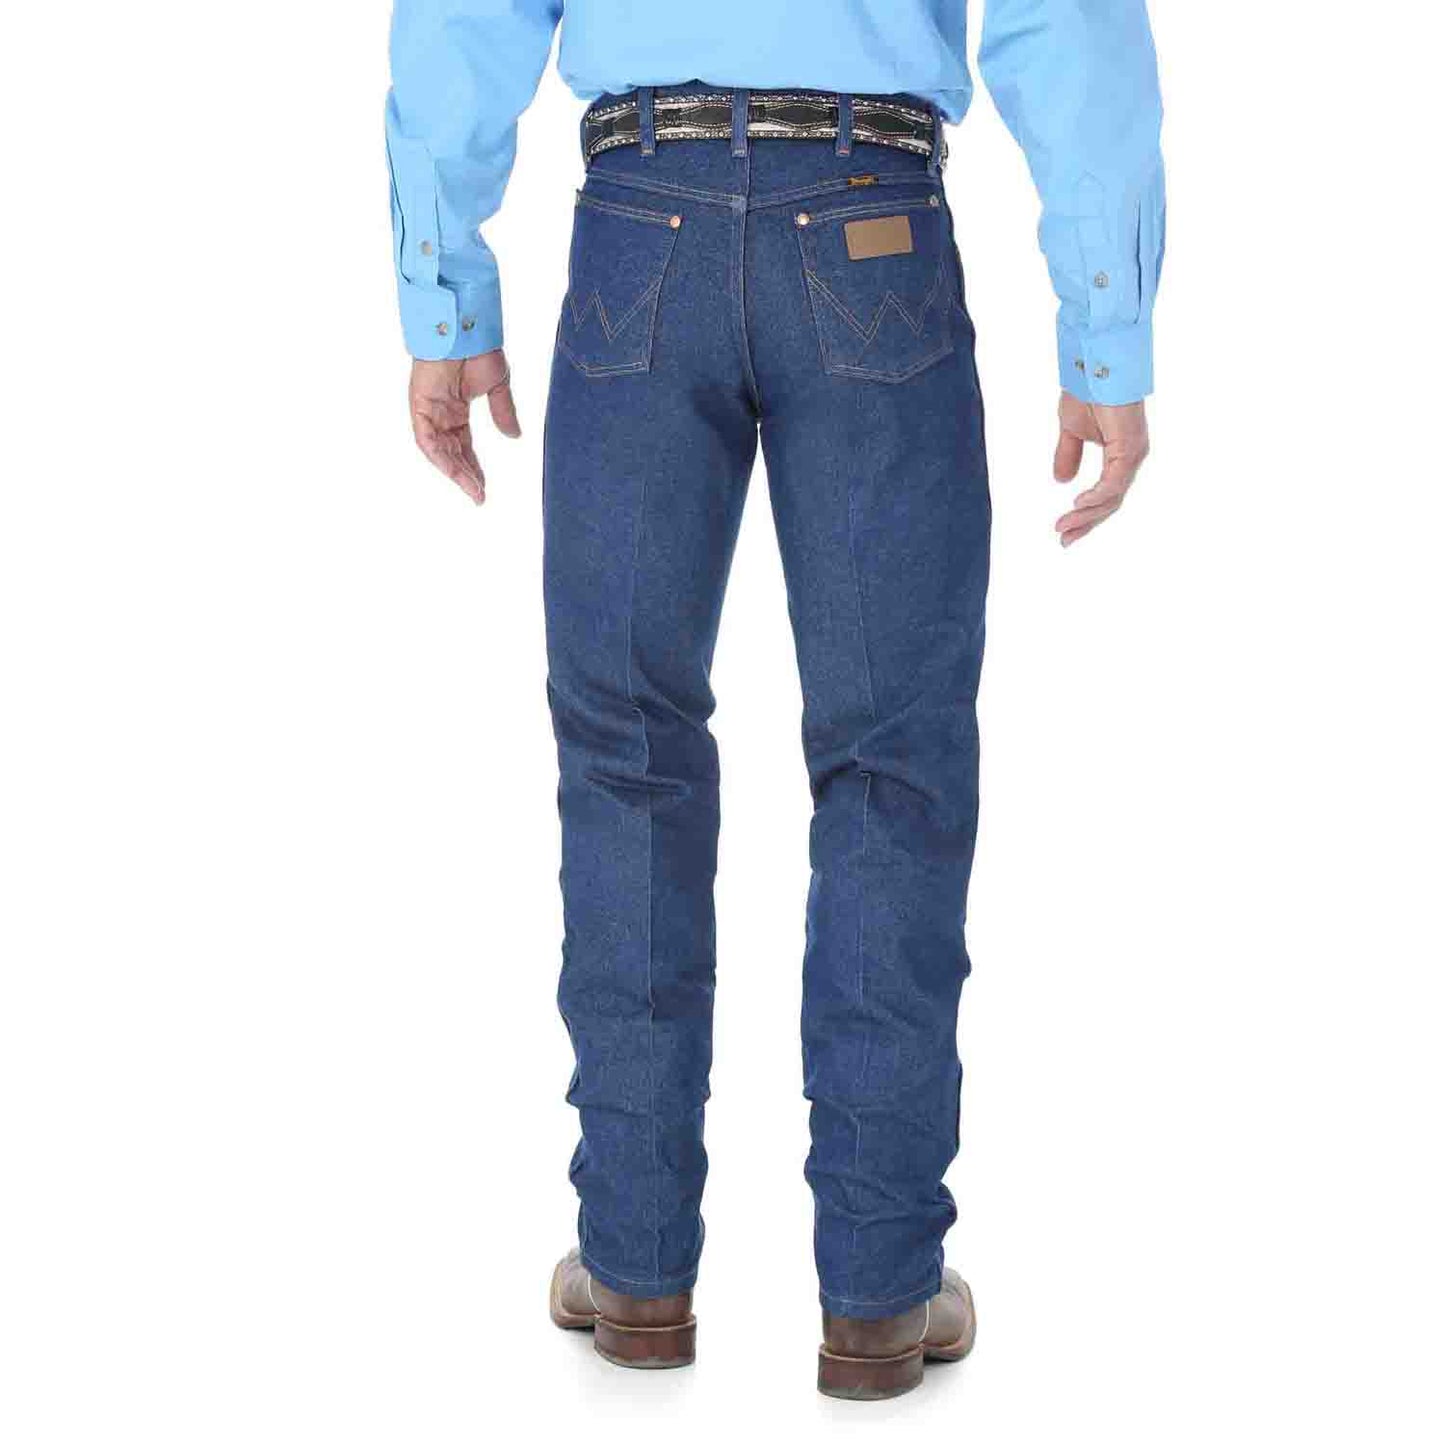 Wrangler Cowboy Cut Original Fit Jeans Rigid Indigo